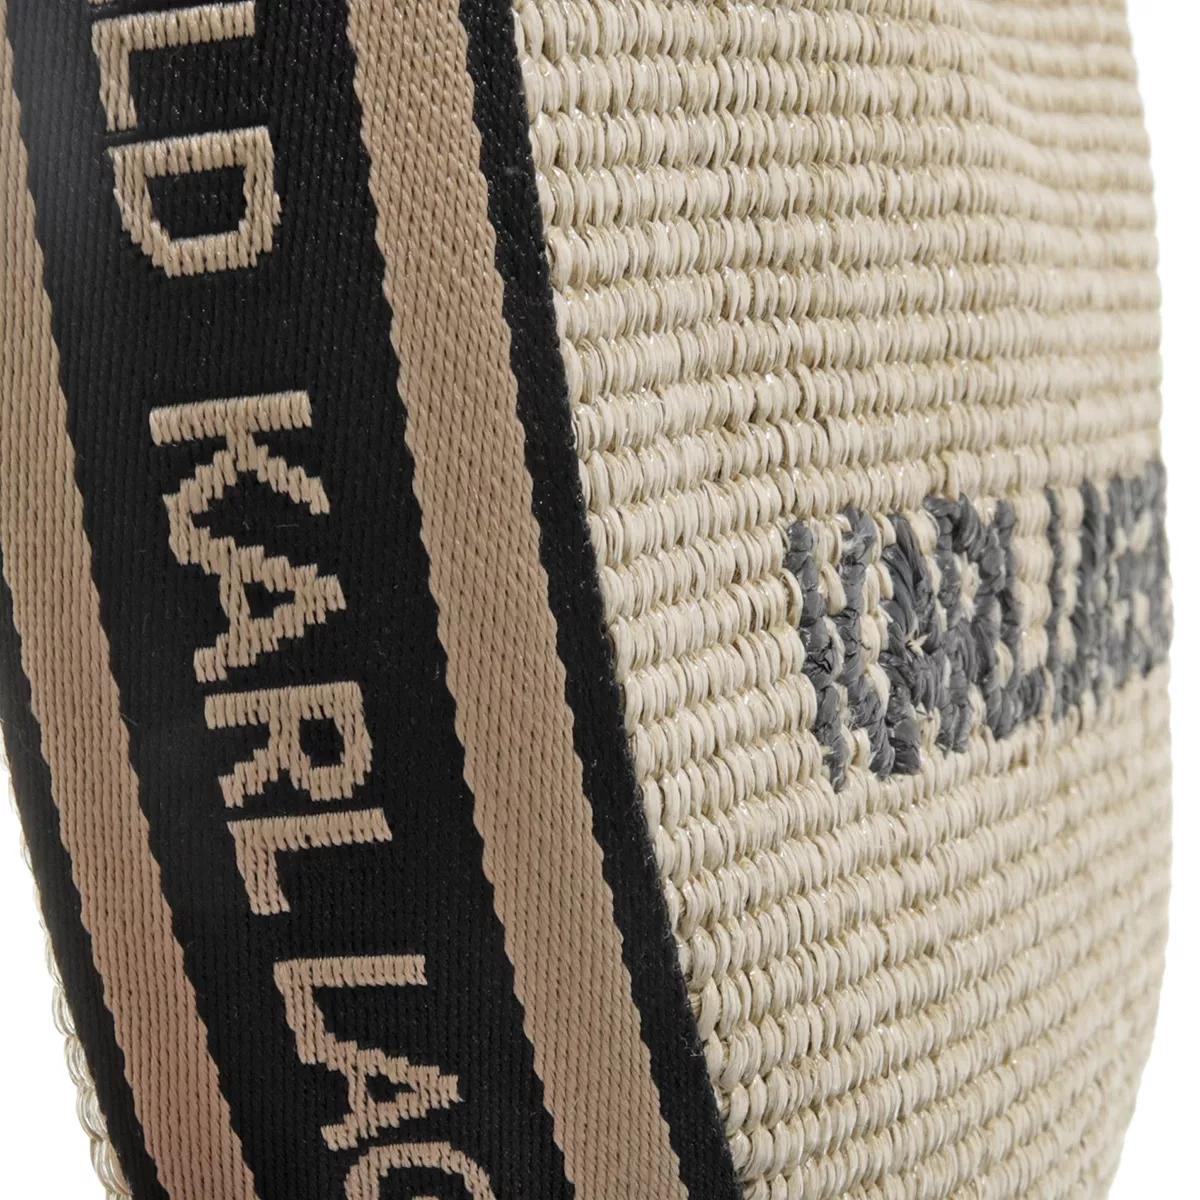 Karl Lagerfeld Hobo bags K Moon Md Shoulderbag Raffia in beige